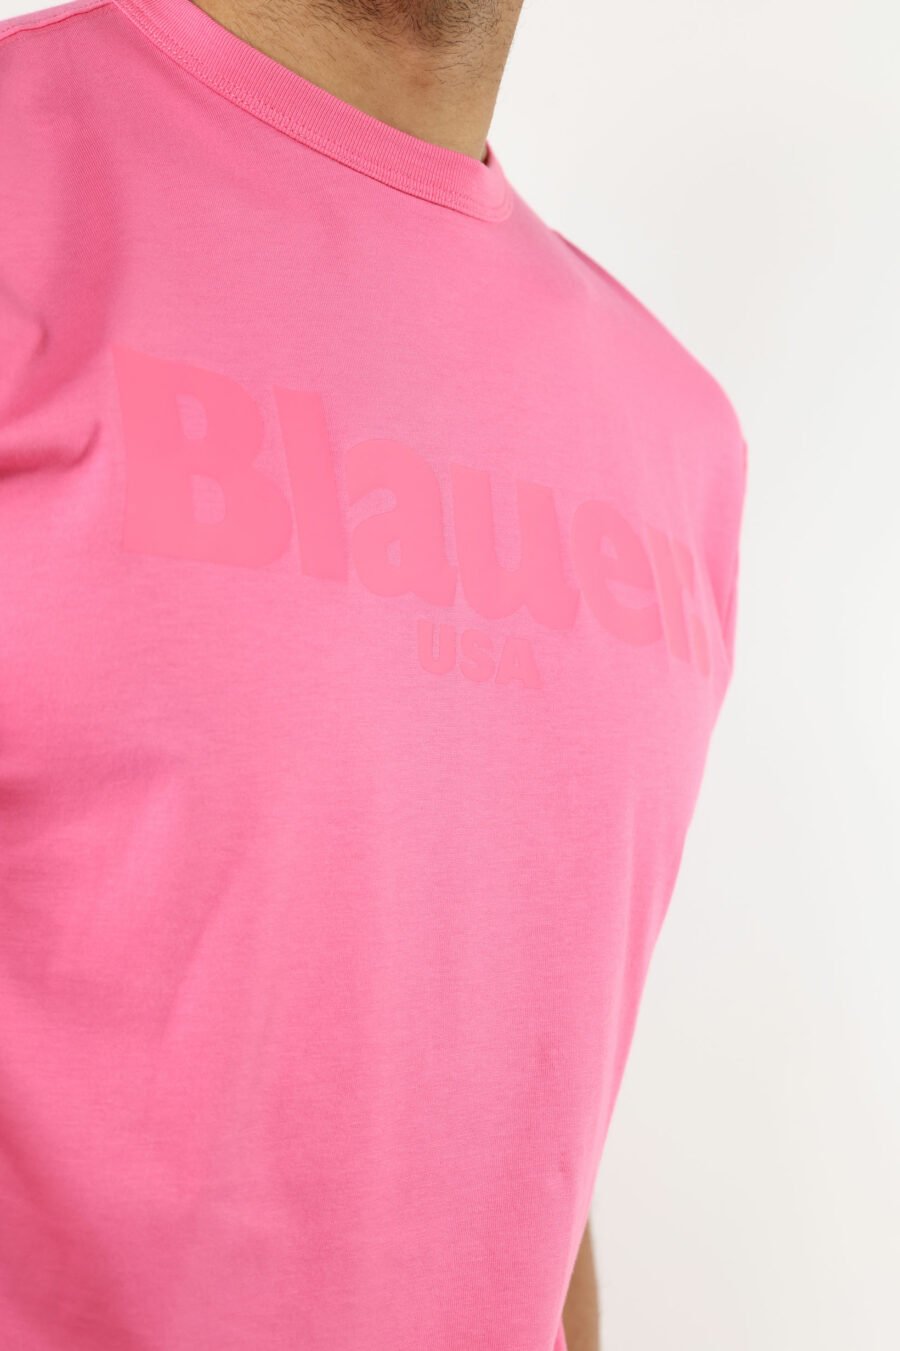 T-shirt rosa com centro de maxilogo monocromático - 111119